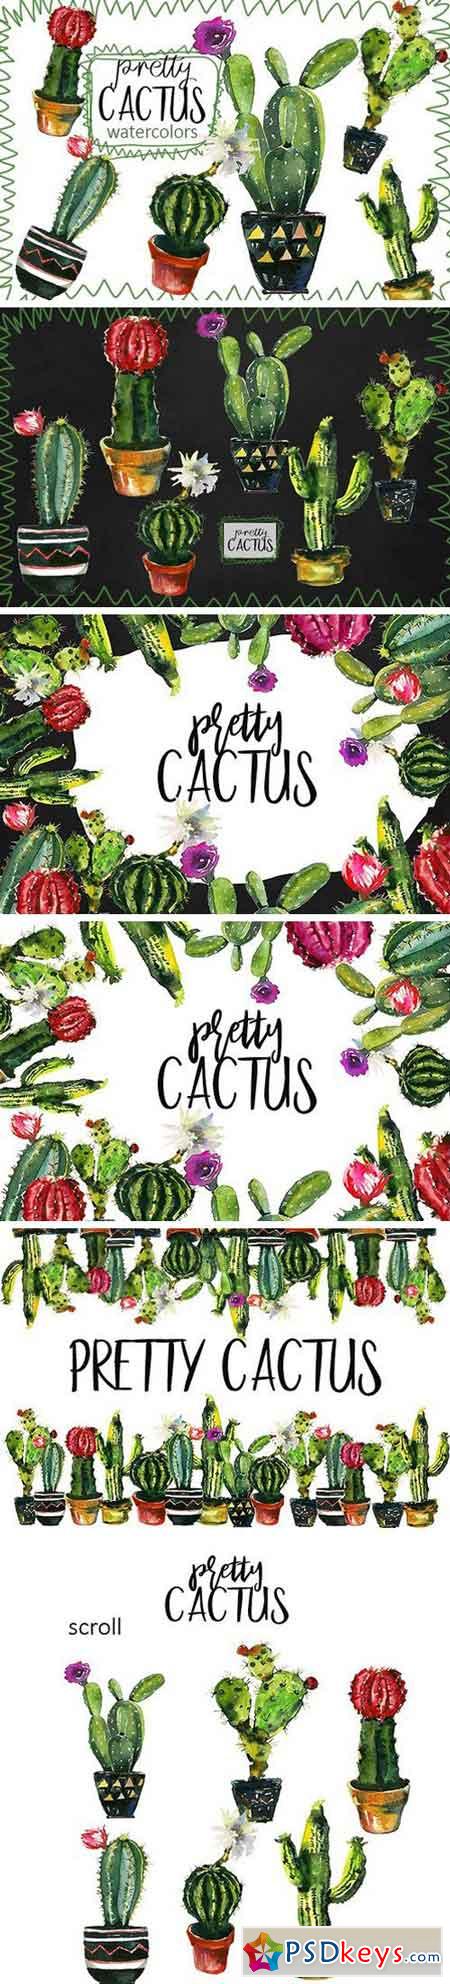 Pretty Cactus Watercolor Clipart Set 1095638